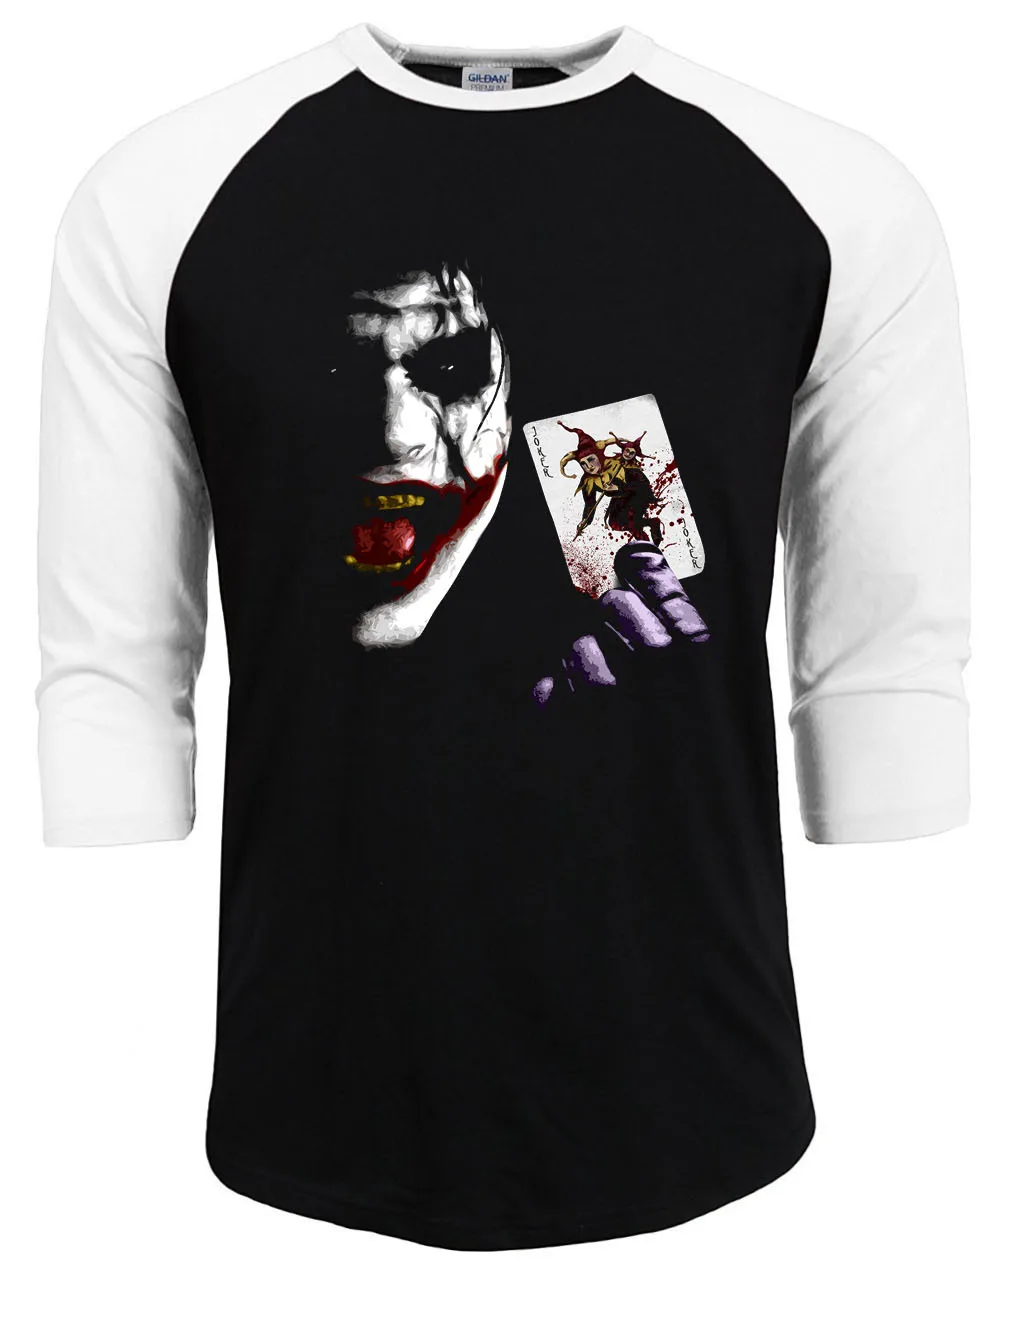 Image 2016 new fashion Men Hot Sale Joker Heath Ledger Tees Vintage Movie Batman 2 The Dark Knight Rises T shirts Funny Print Clothing